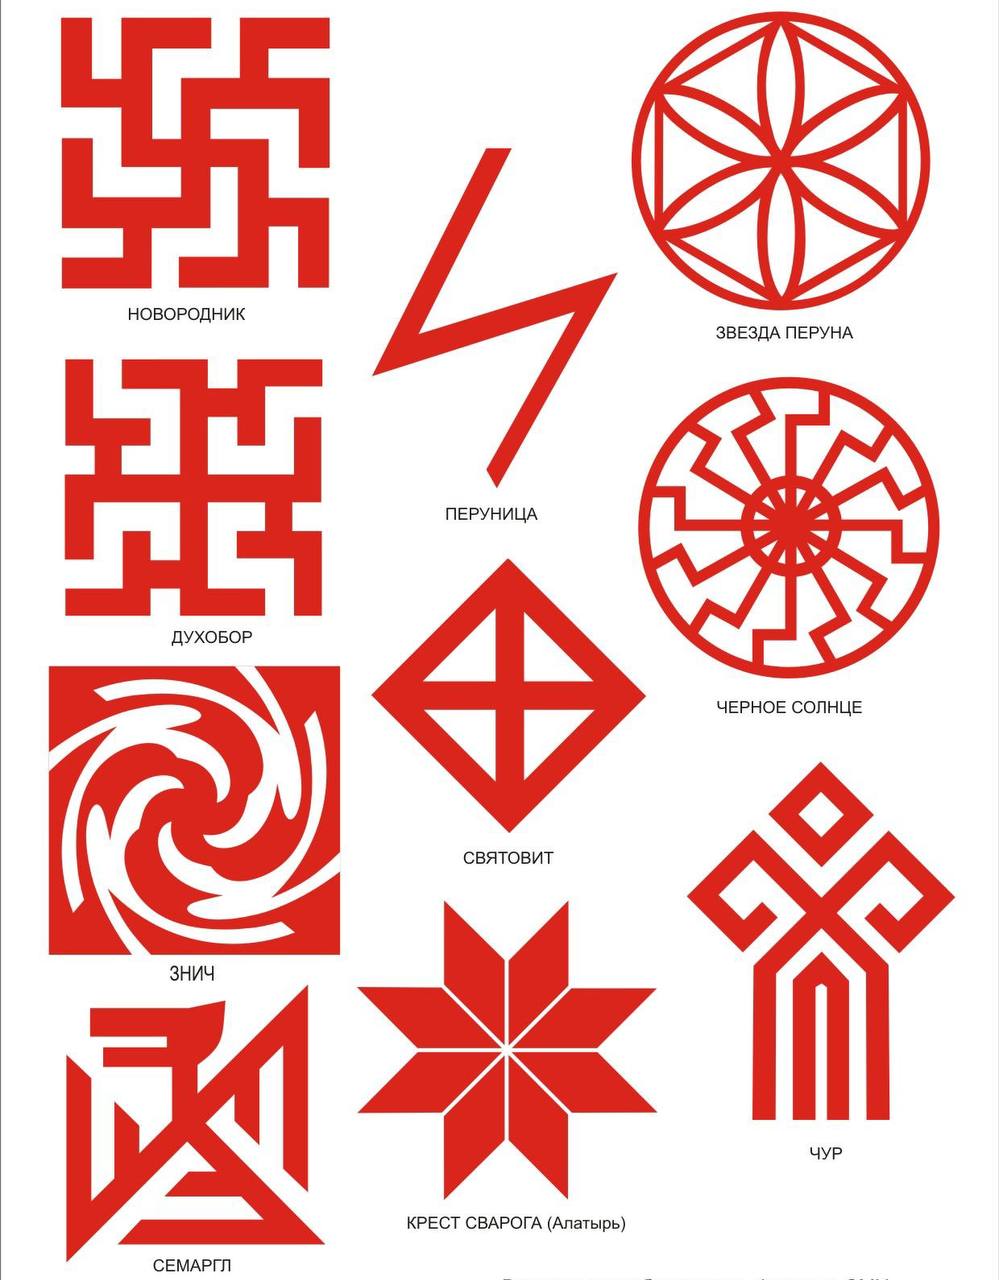 Символы обереги древних славян